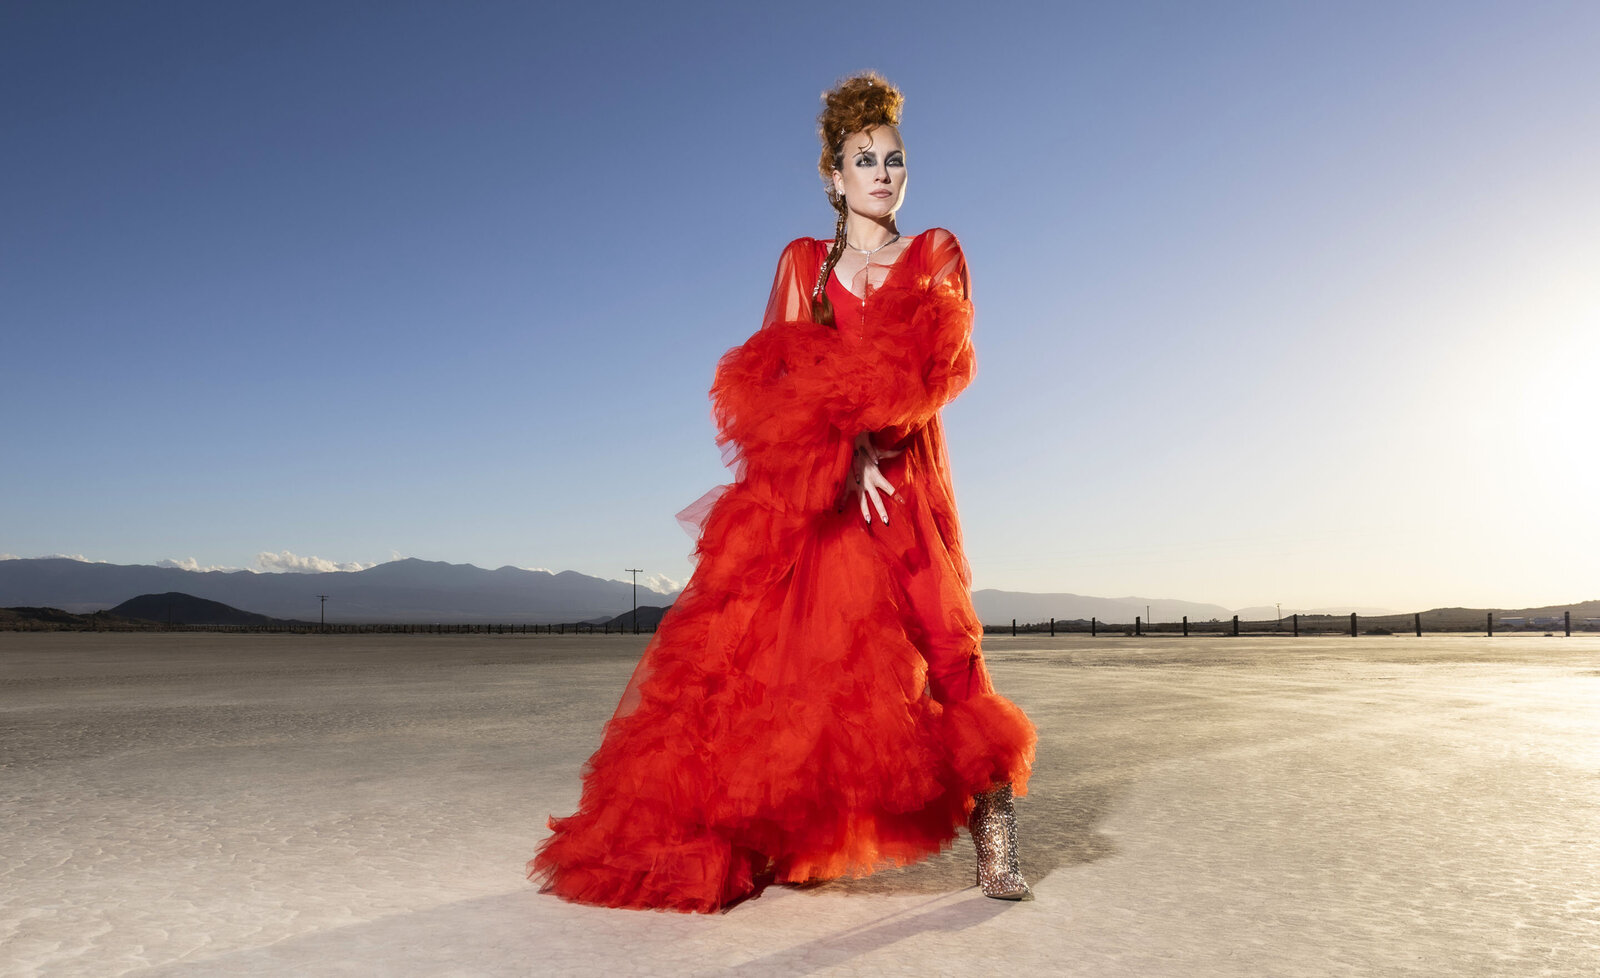 Women musician portrait Tarra Layne wearing red dress standing in desert